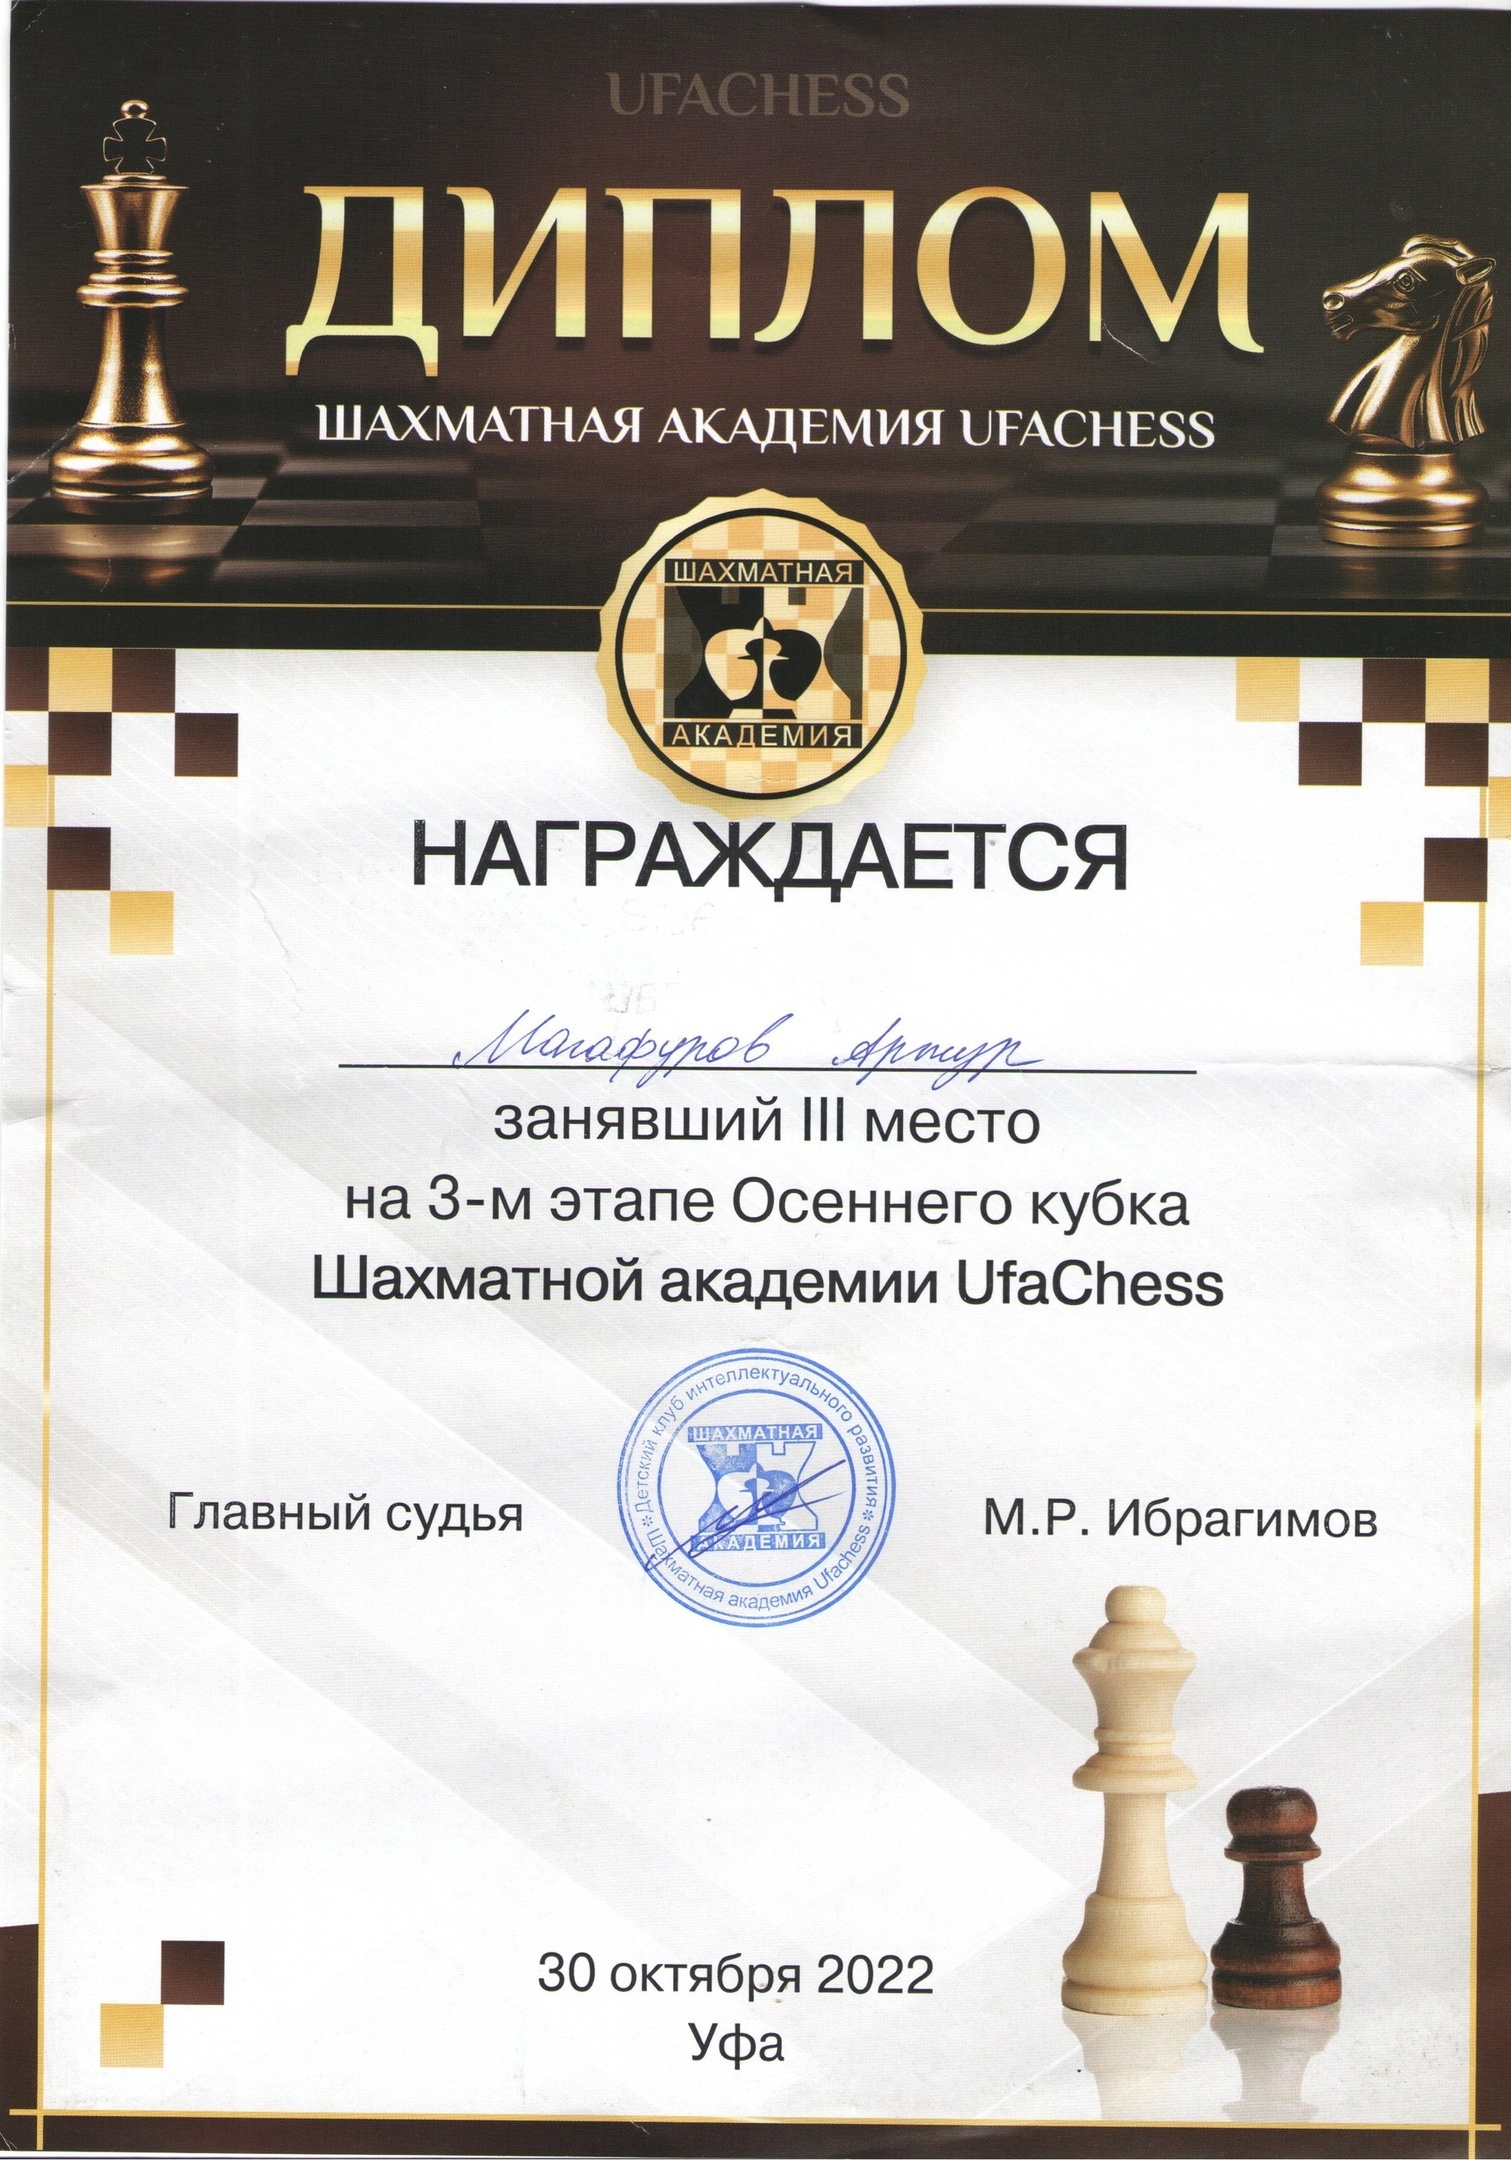 🏆Осенний кубок Шахматной академии UfaChess